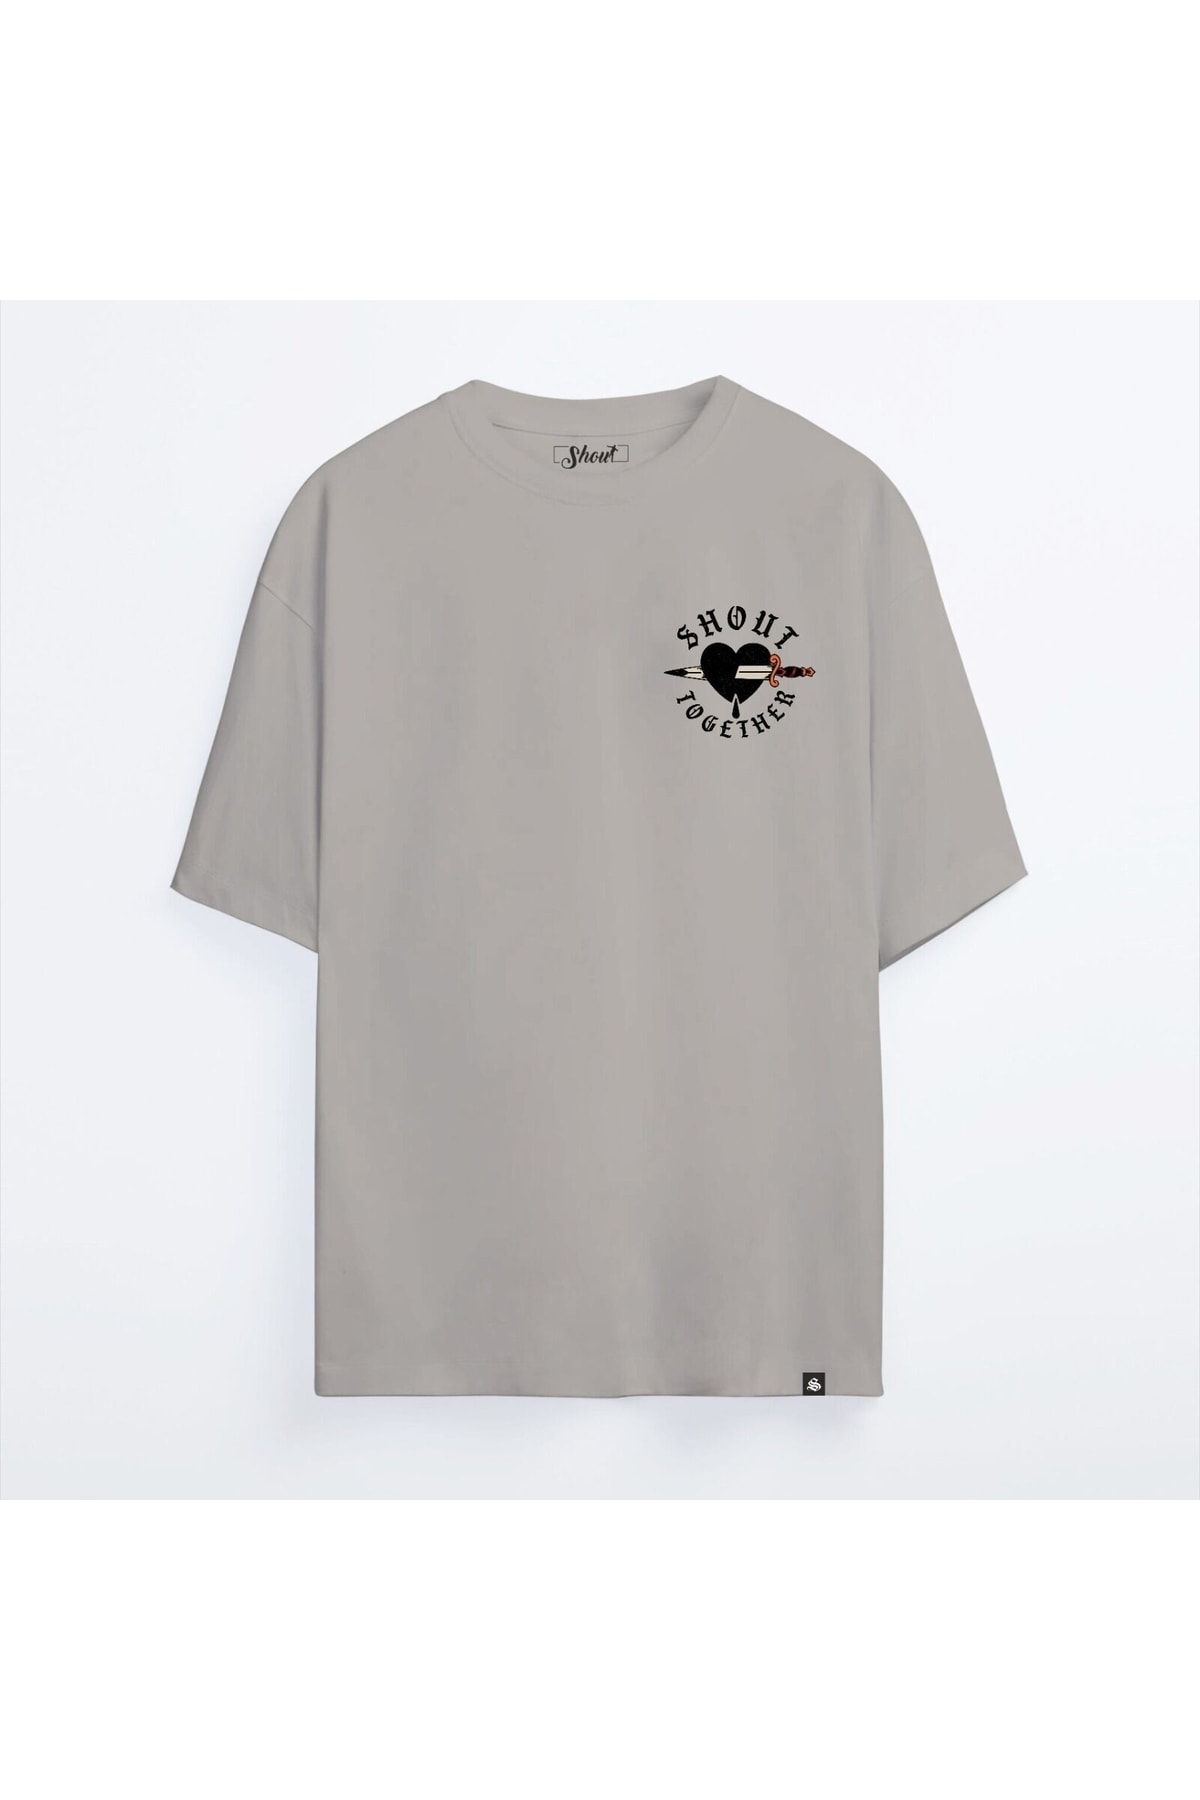 Shout Unisex  Oversize Limited Edition Together T-shirt